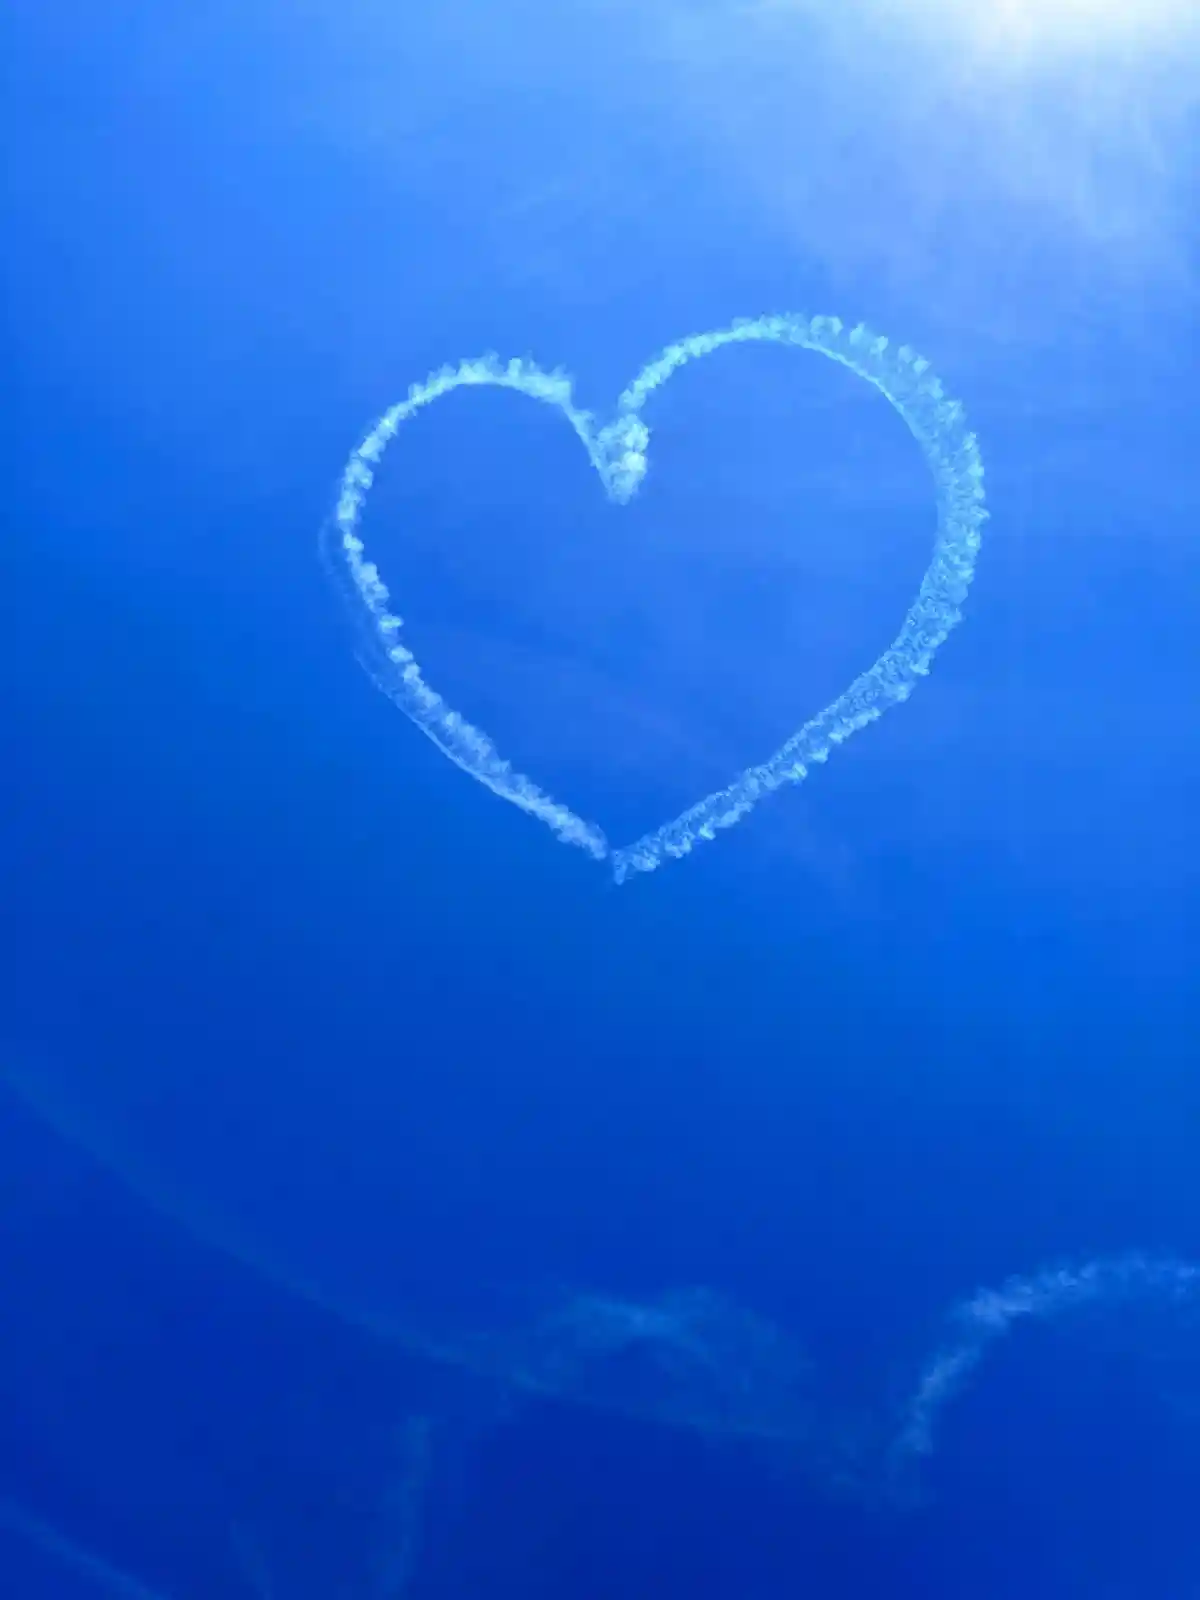 Пилот рисует сердце на темно-синем небе Октоберфеста